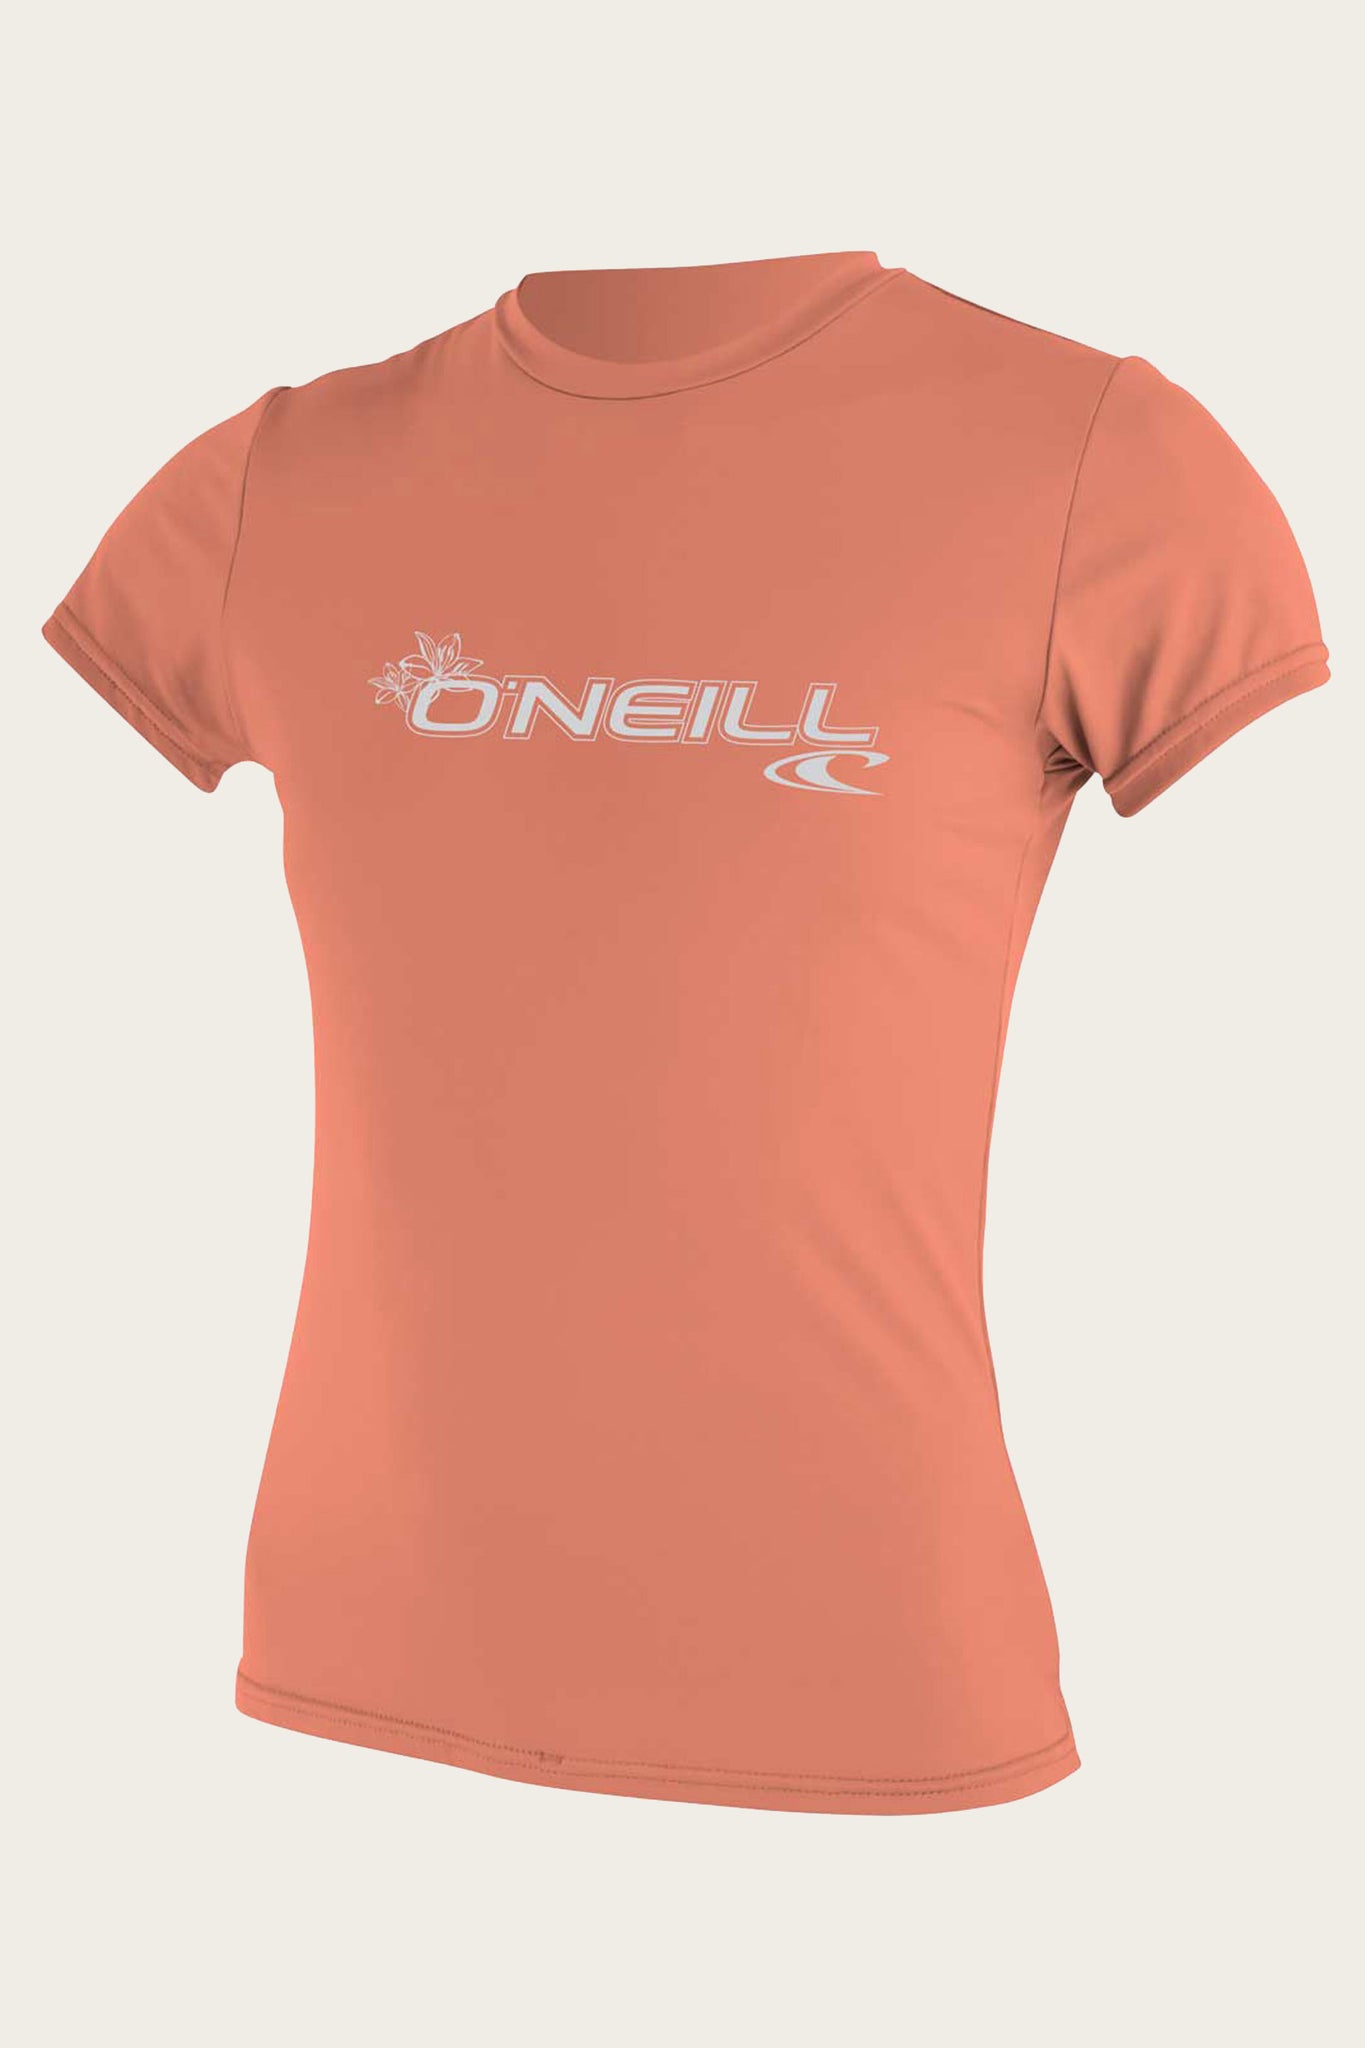 Women's Basic S/S Sun Shirt - Past Season - Lt Grpfrt | O'Neill